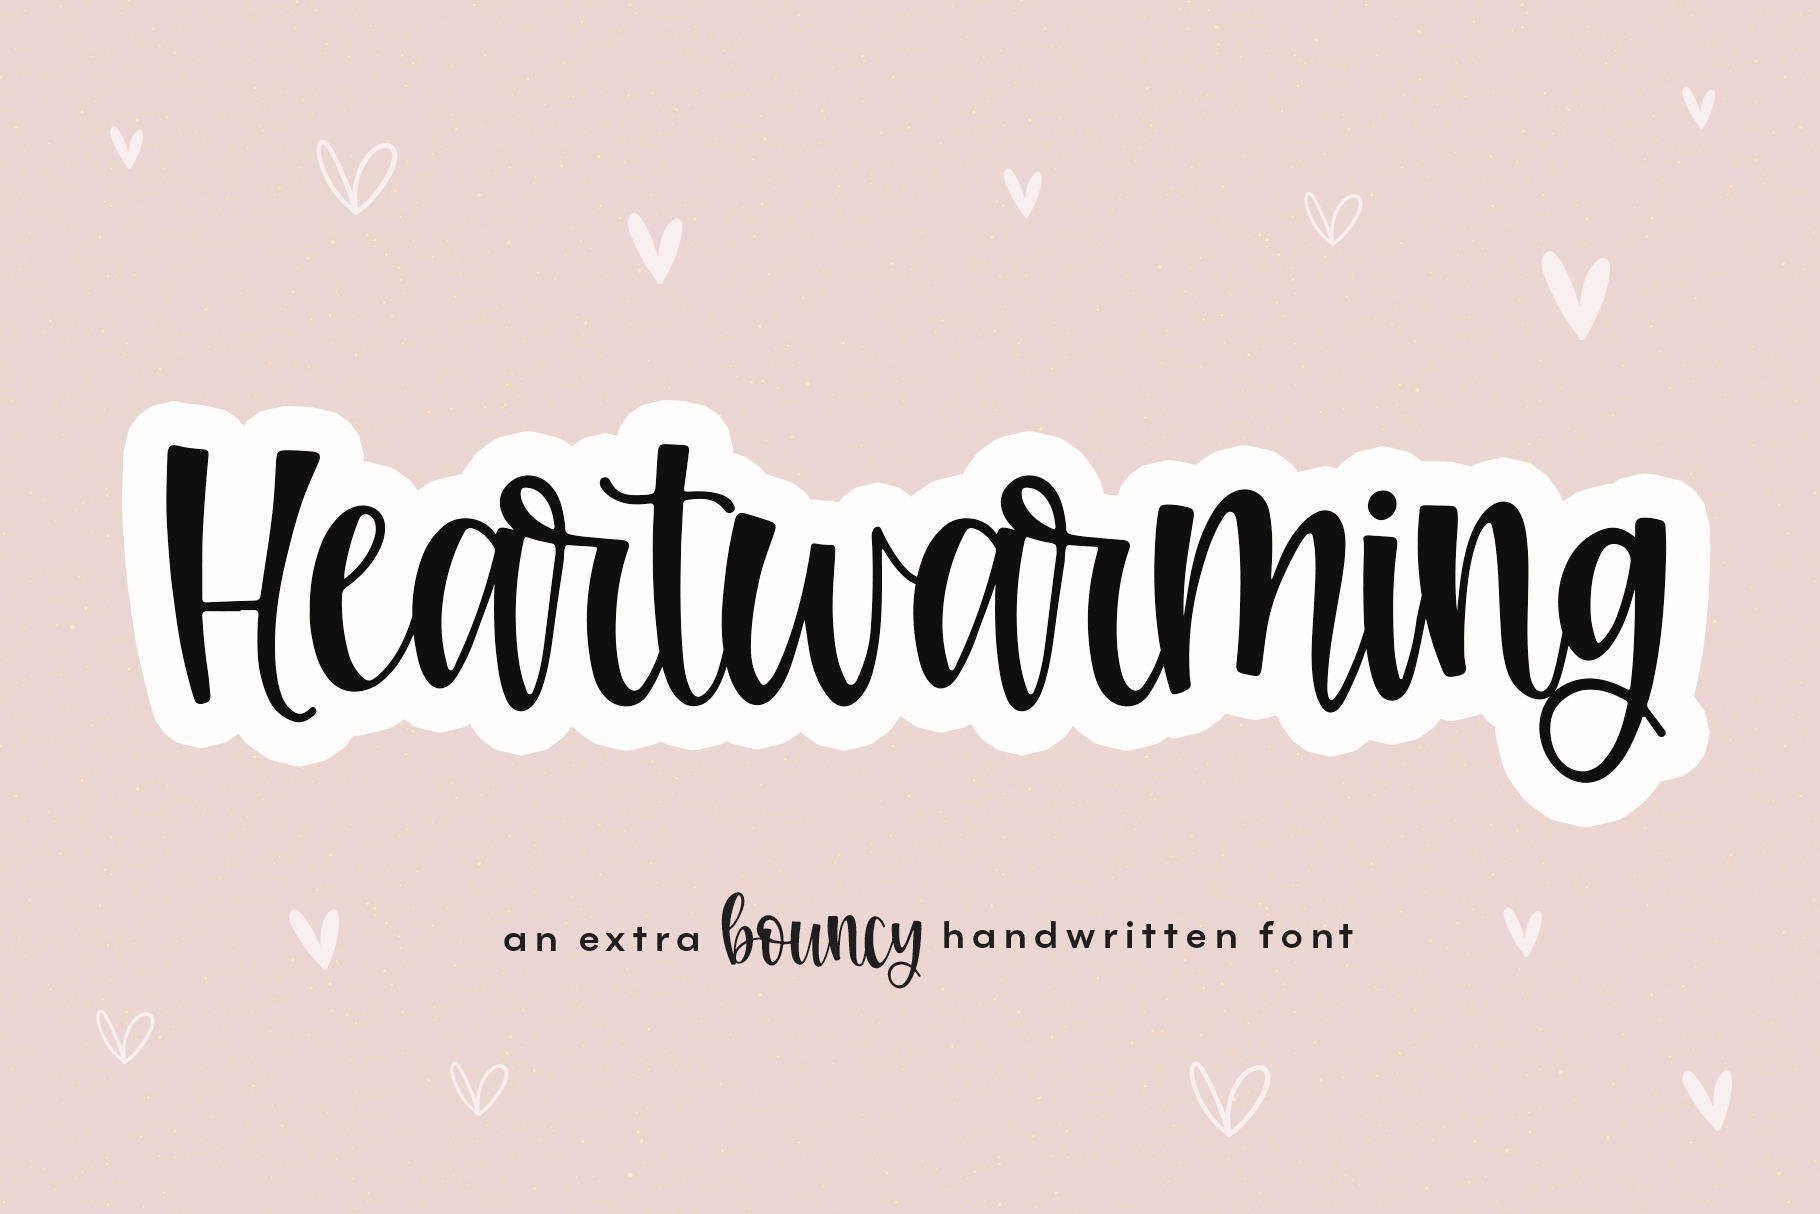 Heartwarming A Cute Bouncy Script Font By Ka Designs Thehungryjpeg Com